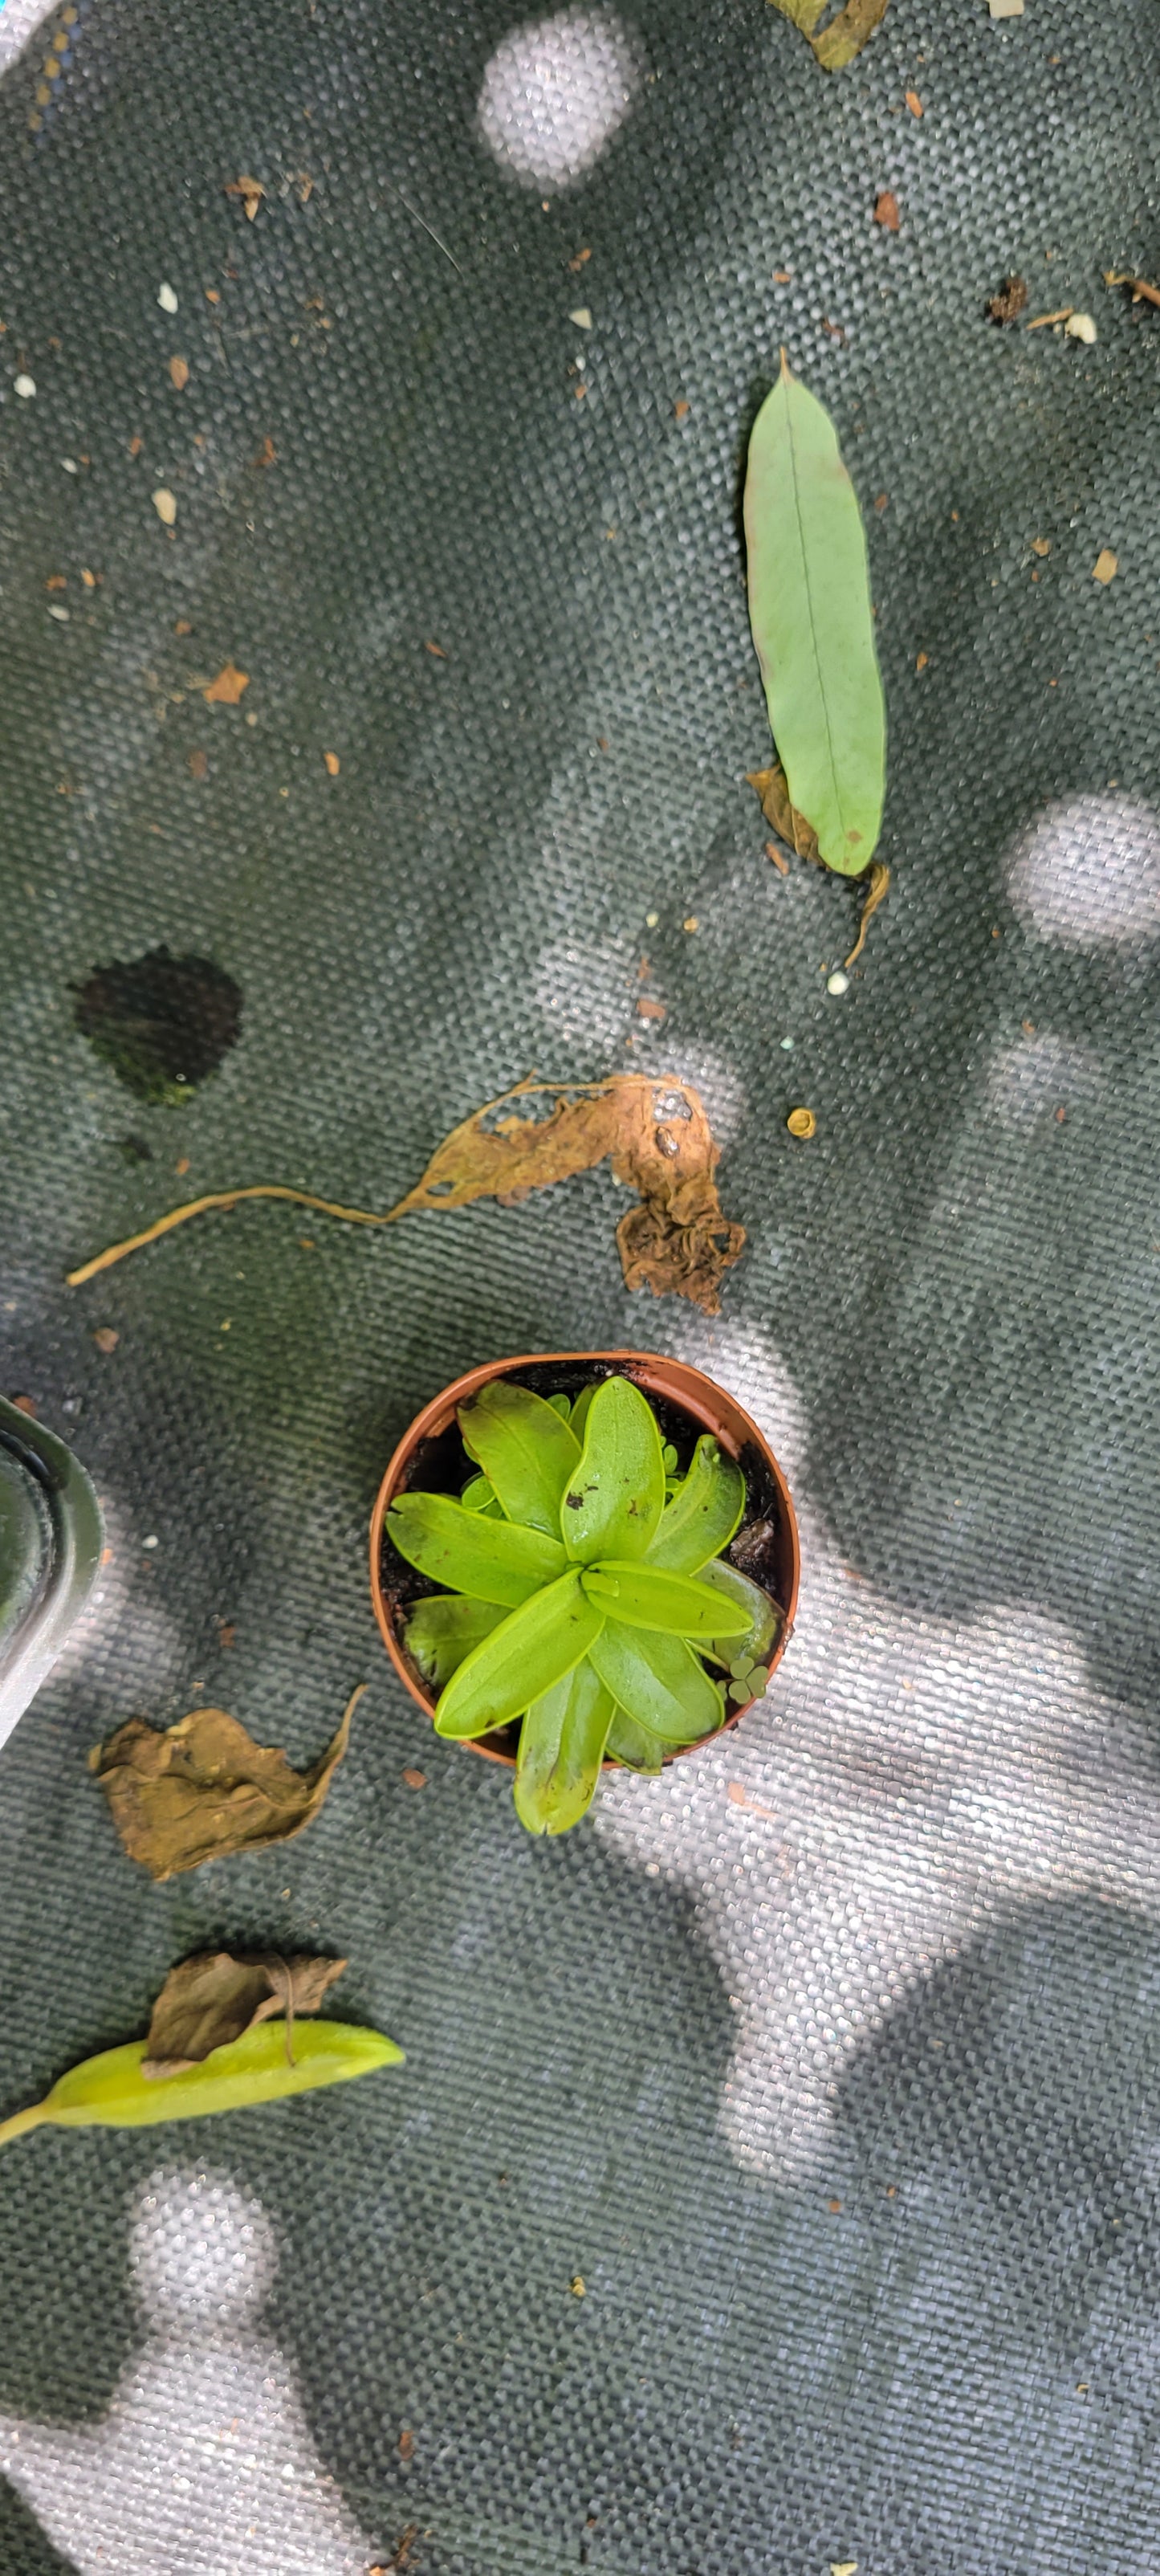 Pinguicula Butterwort Primulifloria carnivorous plants in two inch pots.